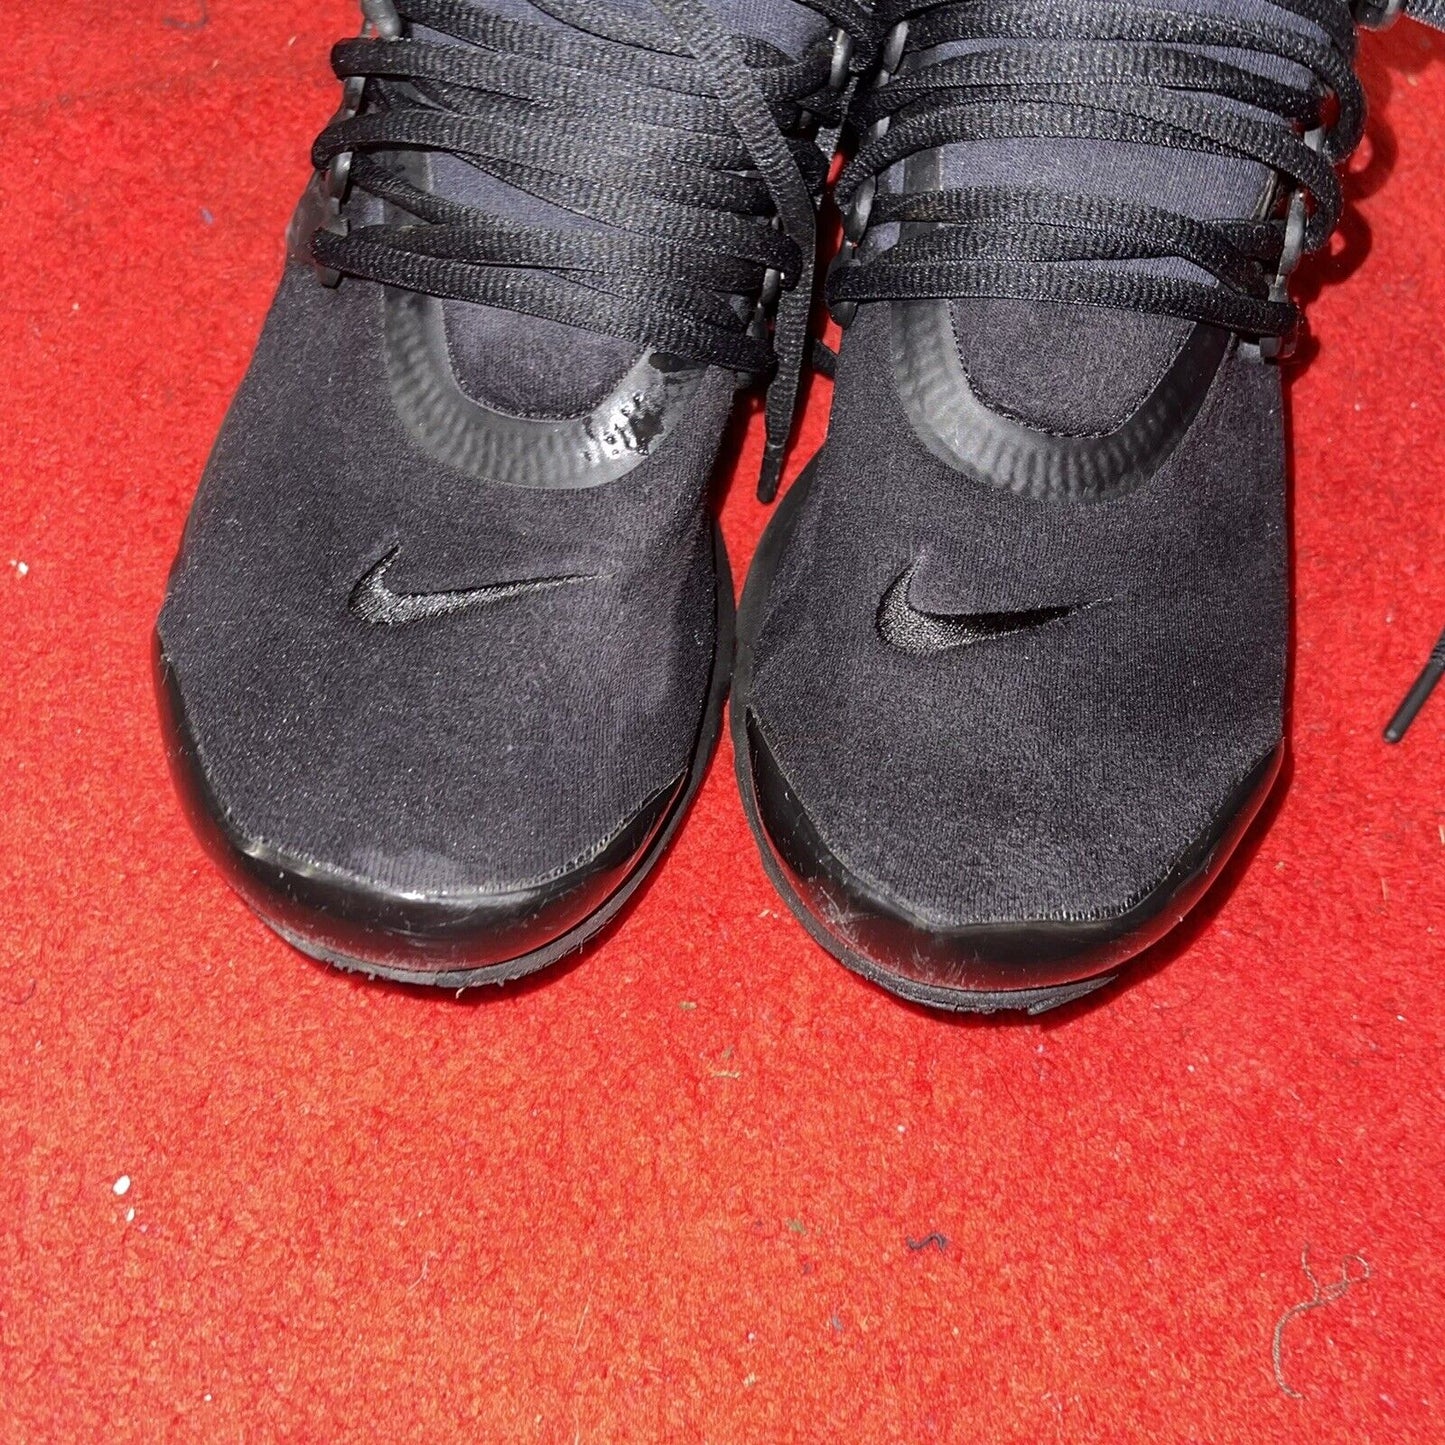 Nike 305919-009 Air Presto Triple Black Casual Running Shoe Size S (8-9)